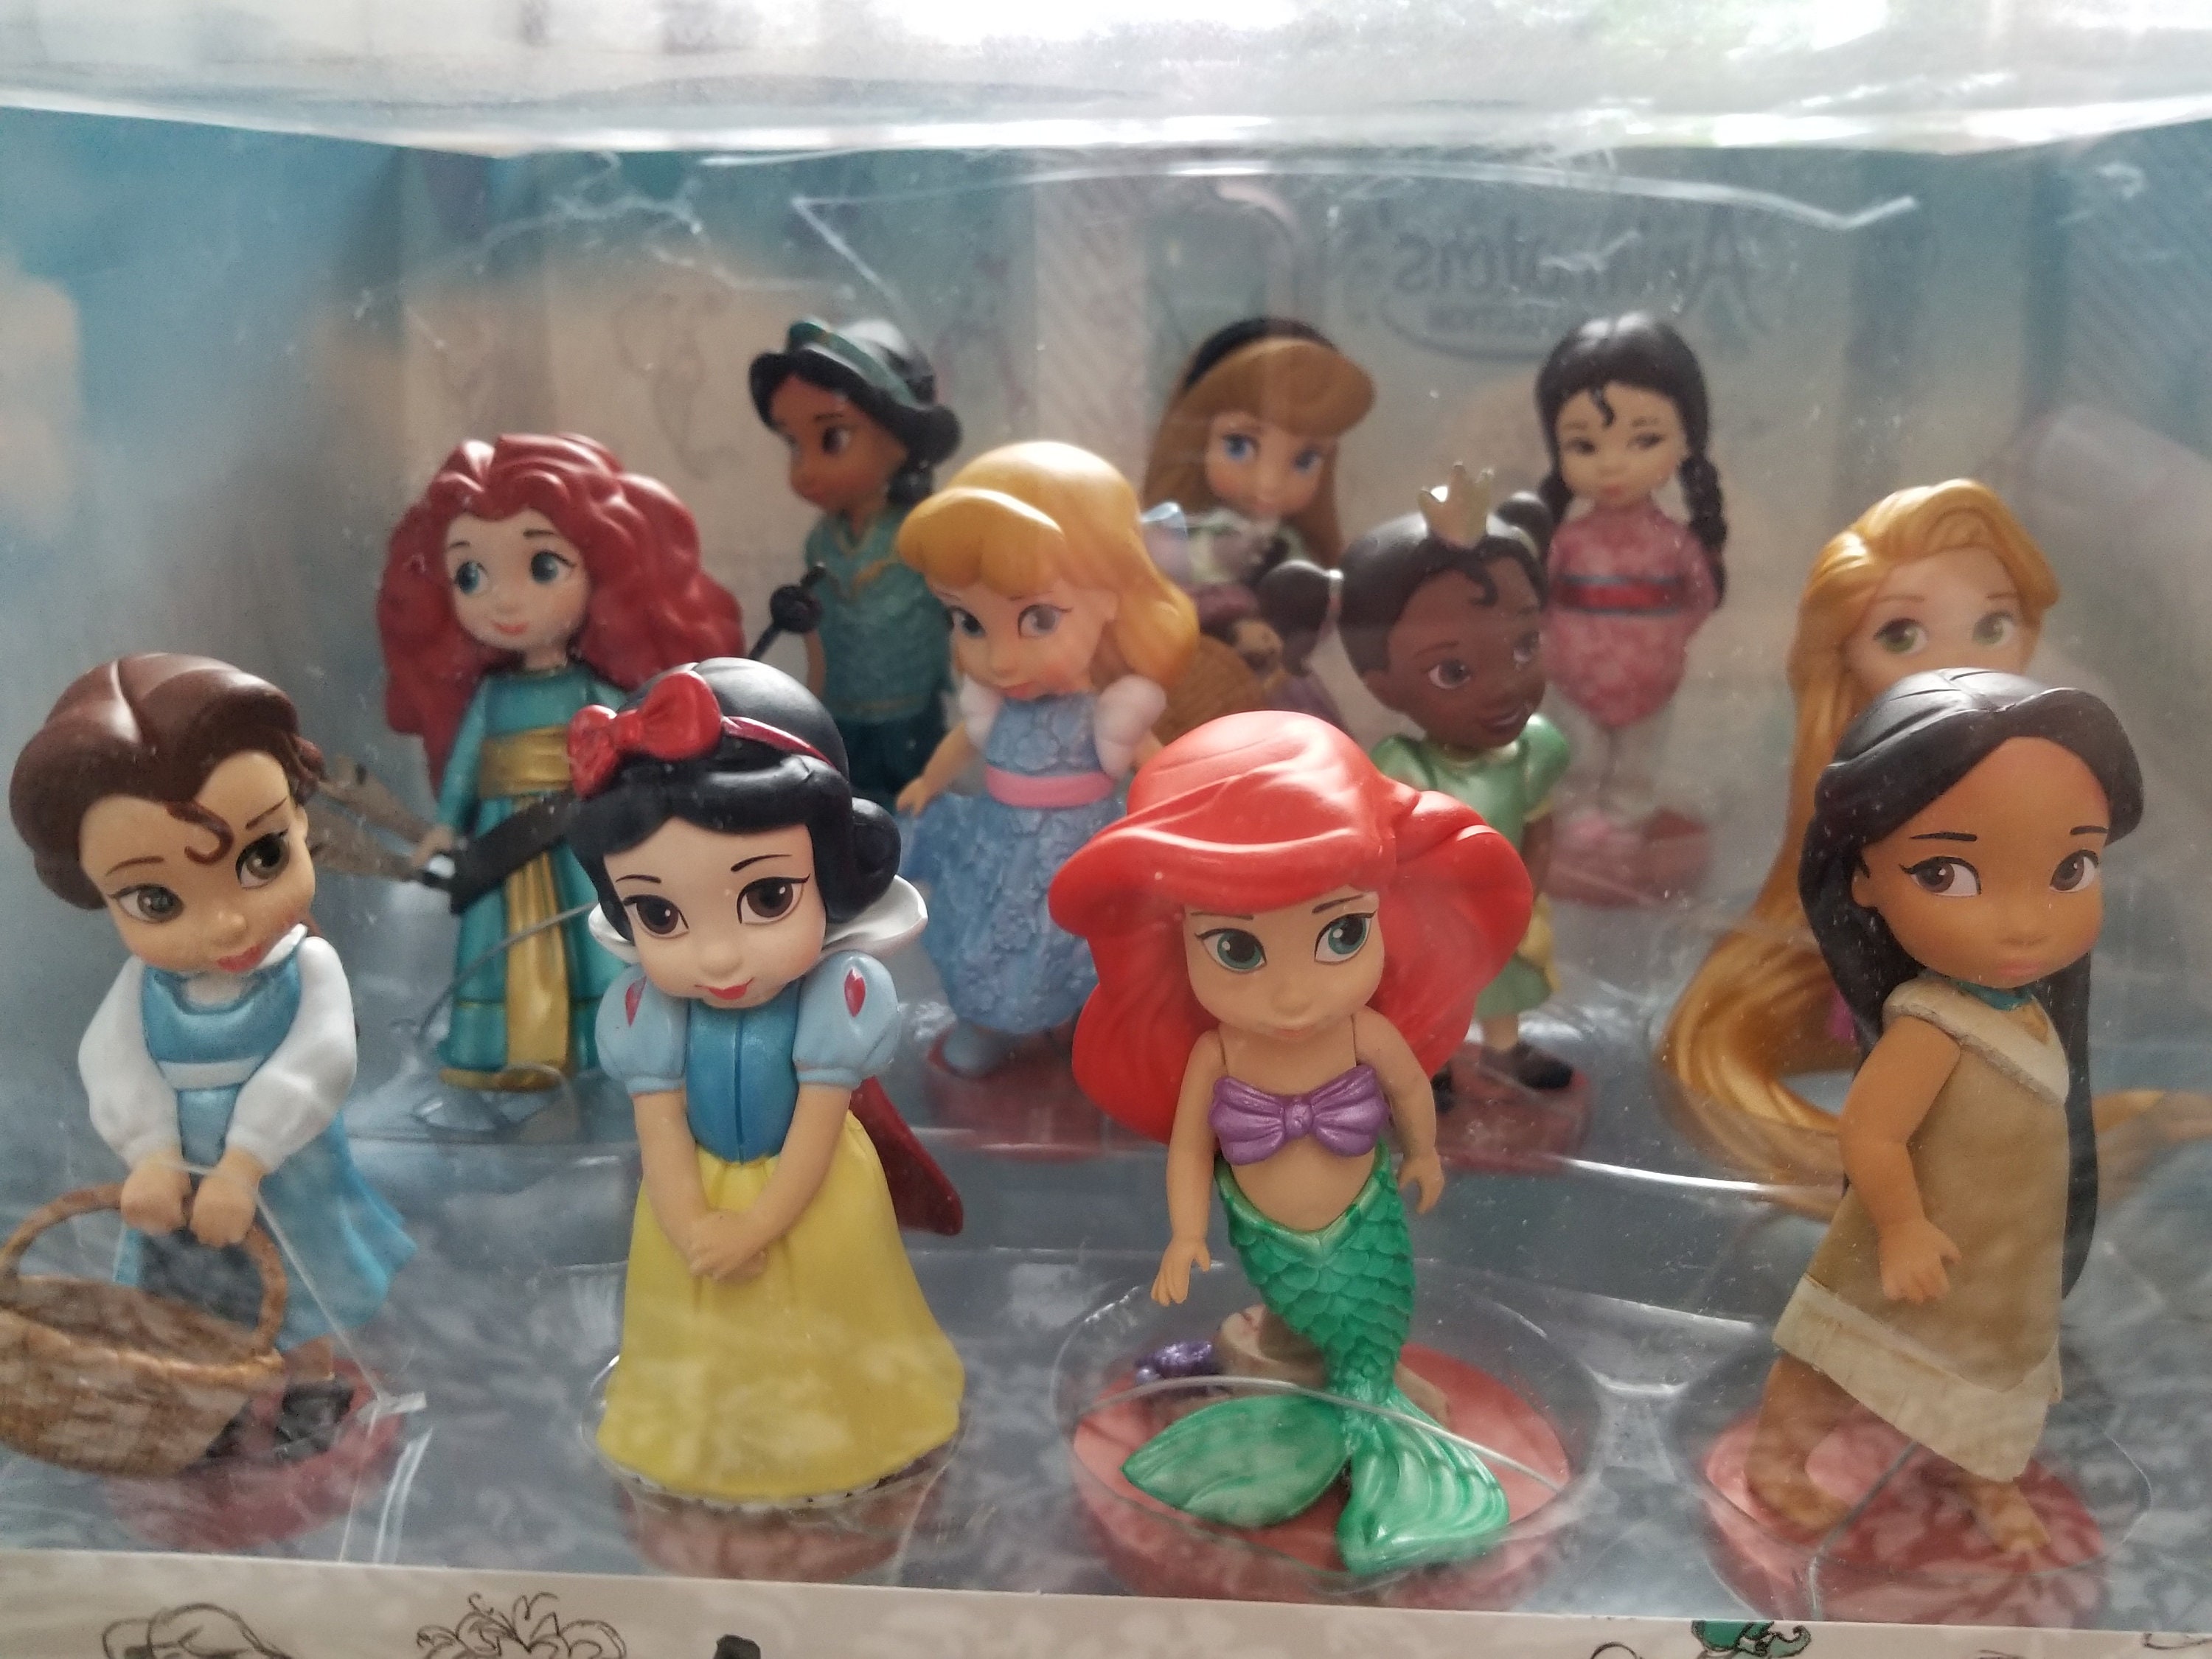 mini princess figurines